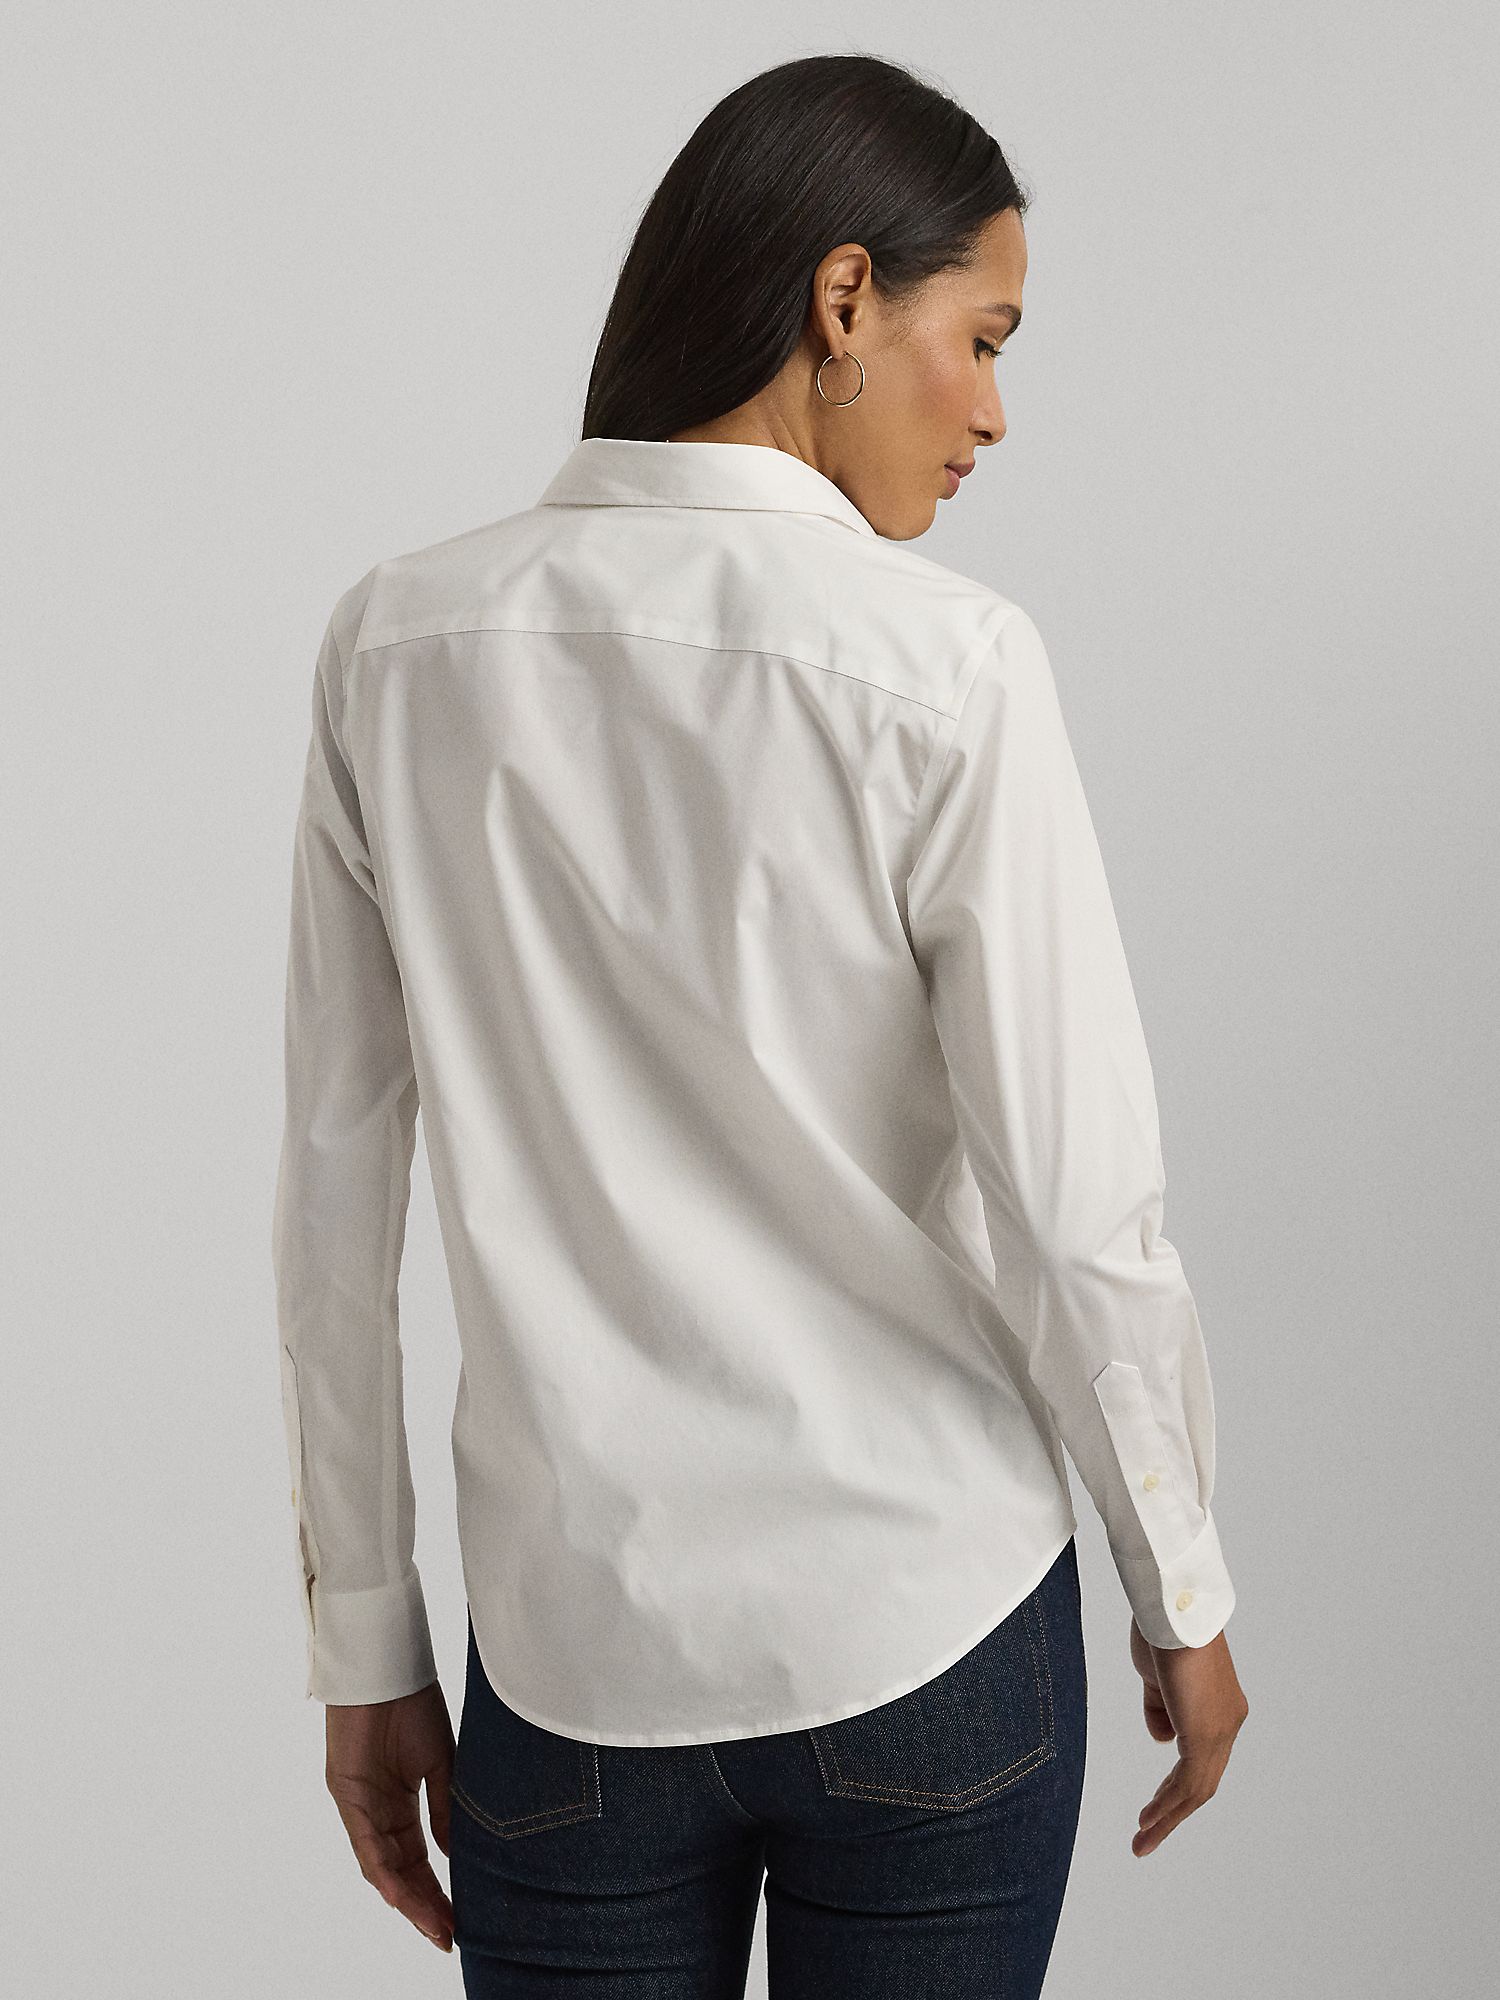 Lauren Ralph Lauren Jamelko Long Sleeve Shirt, White, L